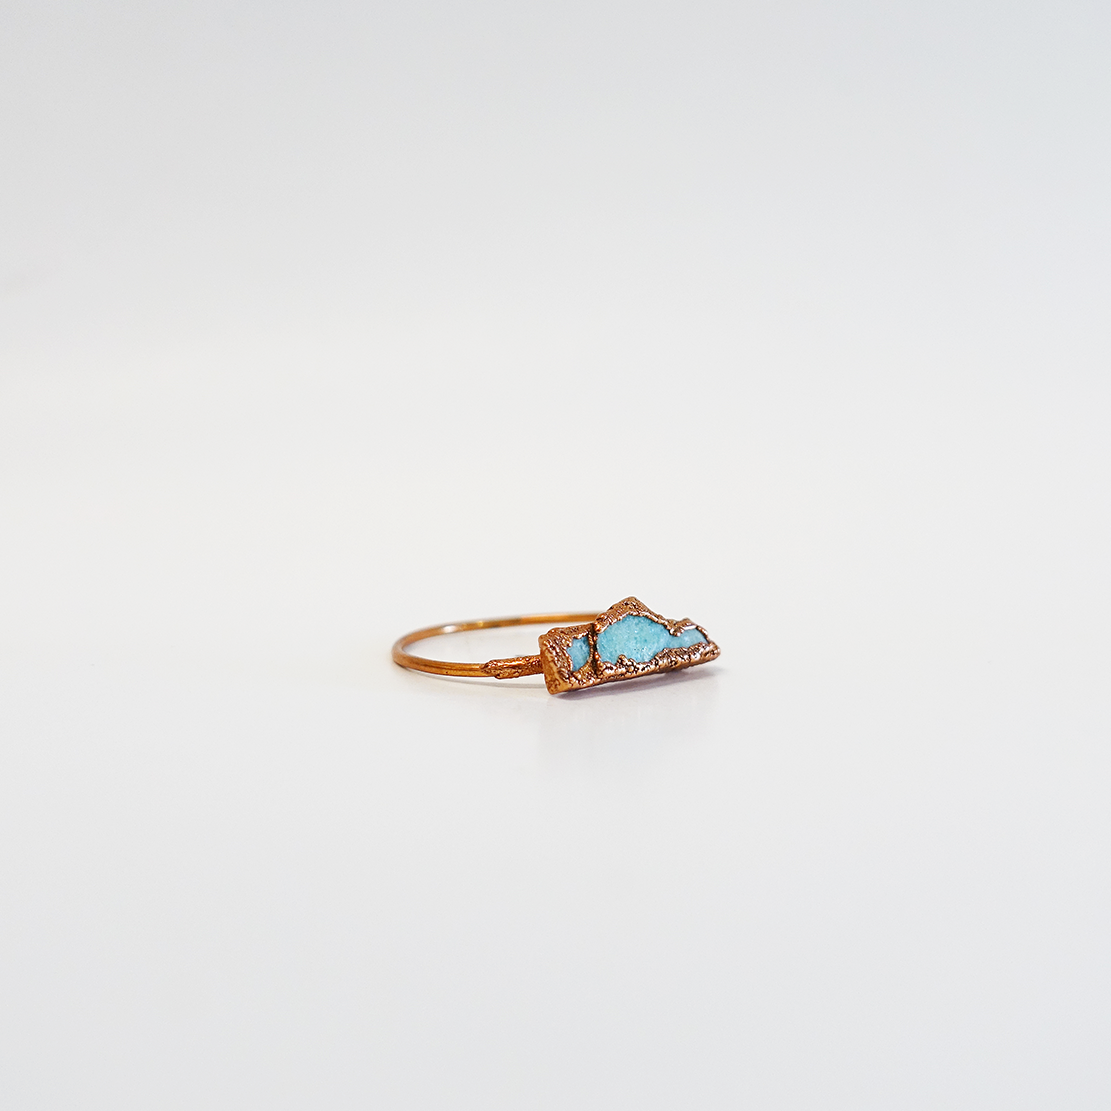 Amazonite Solitare Copper-Plated Ring (Size 9.75)